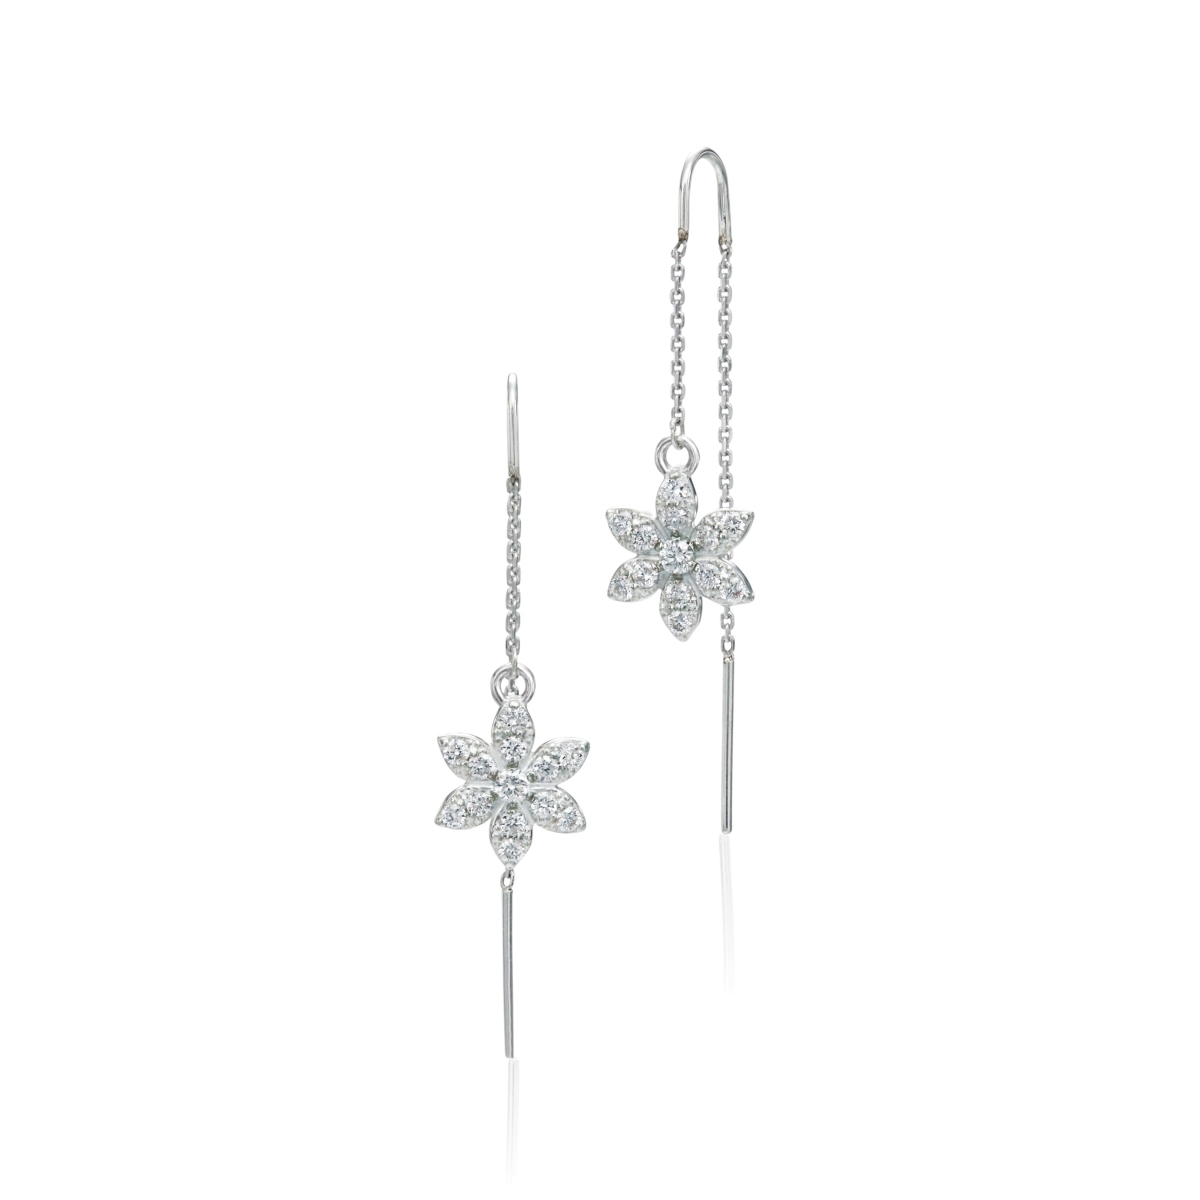 Lde1 0.52 Ct White Diamonds Moonflower Earrings In Sterling Silver